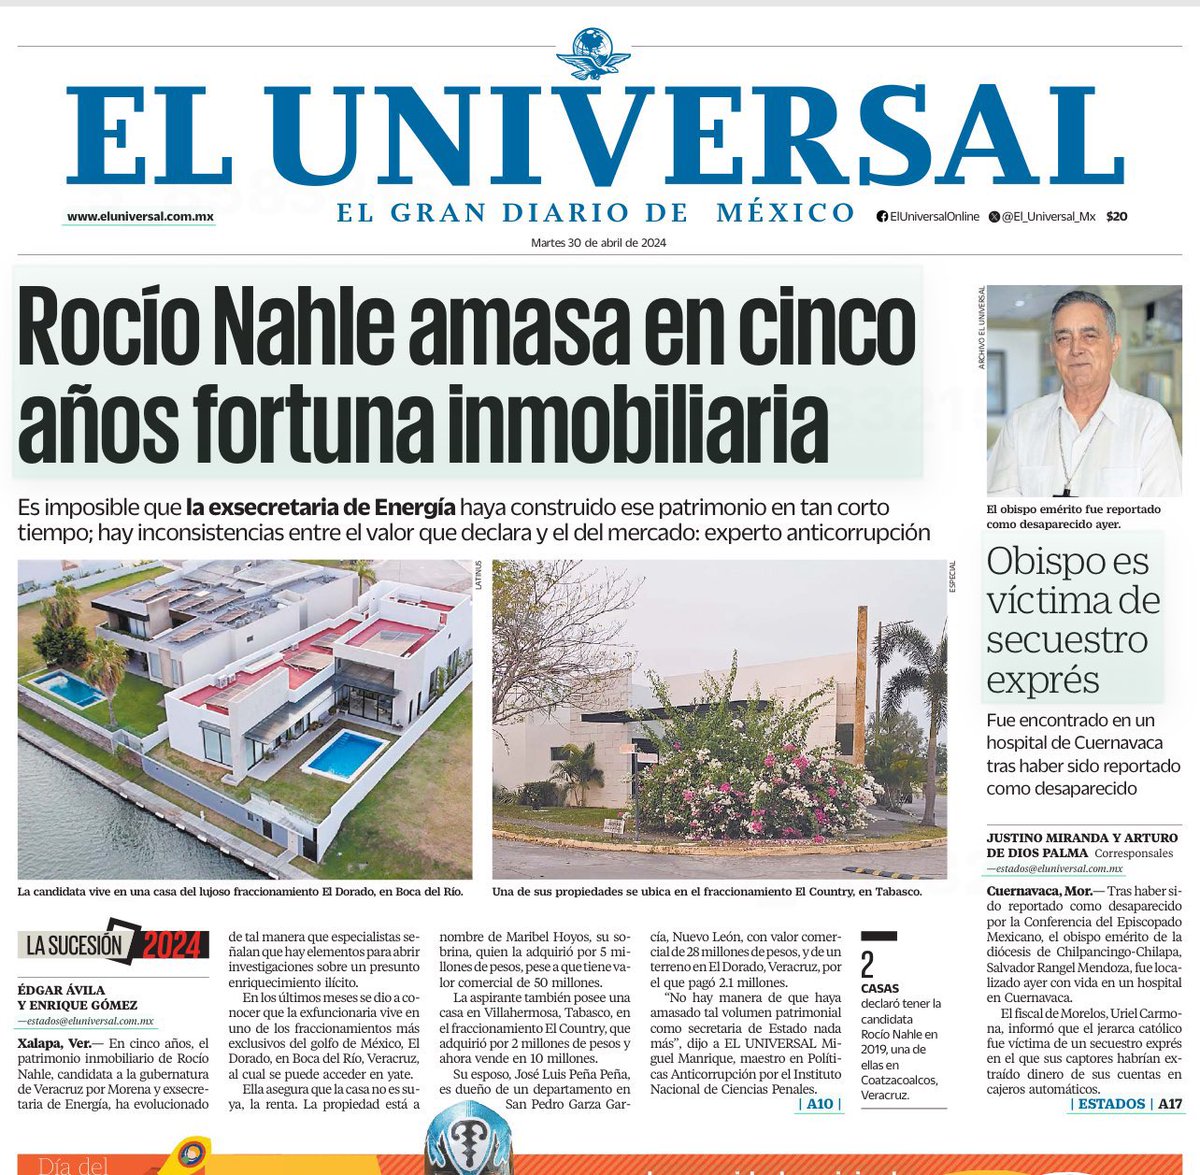 @El_Universal_Mx Mejor cállate #NarcoCandidataCaludia50 
#NarcoCandidata 
#CandidataDeLasMentiras 
@Claudiashein